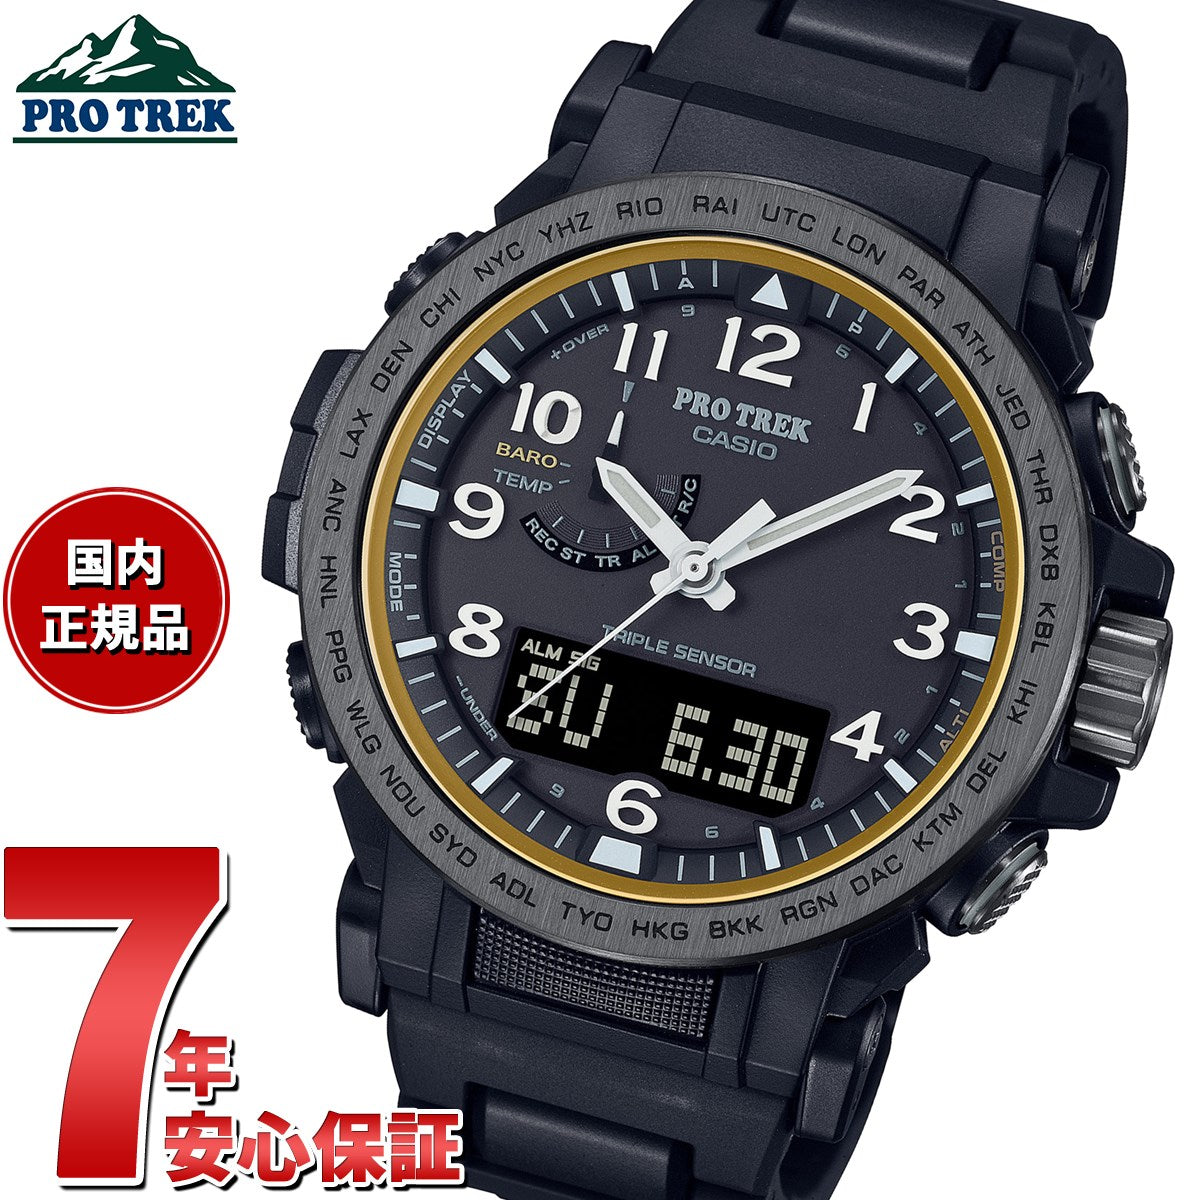 516 CASIO PROTREK プロトレック メンズ腕時計 高級チタニウム いい ...